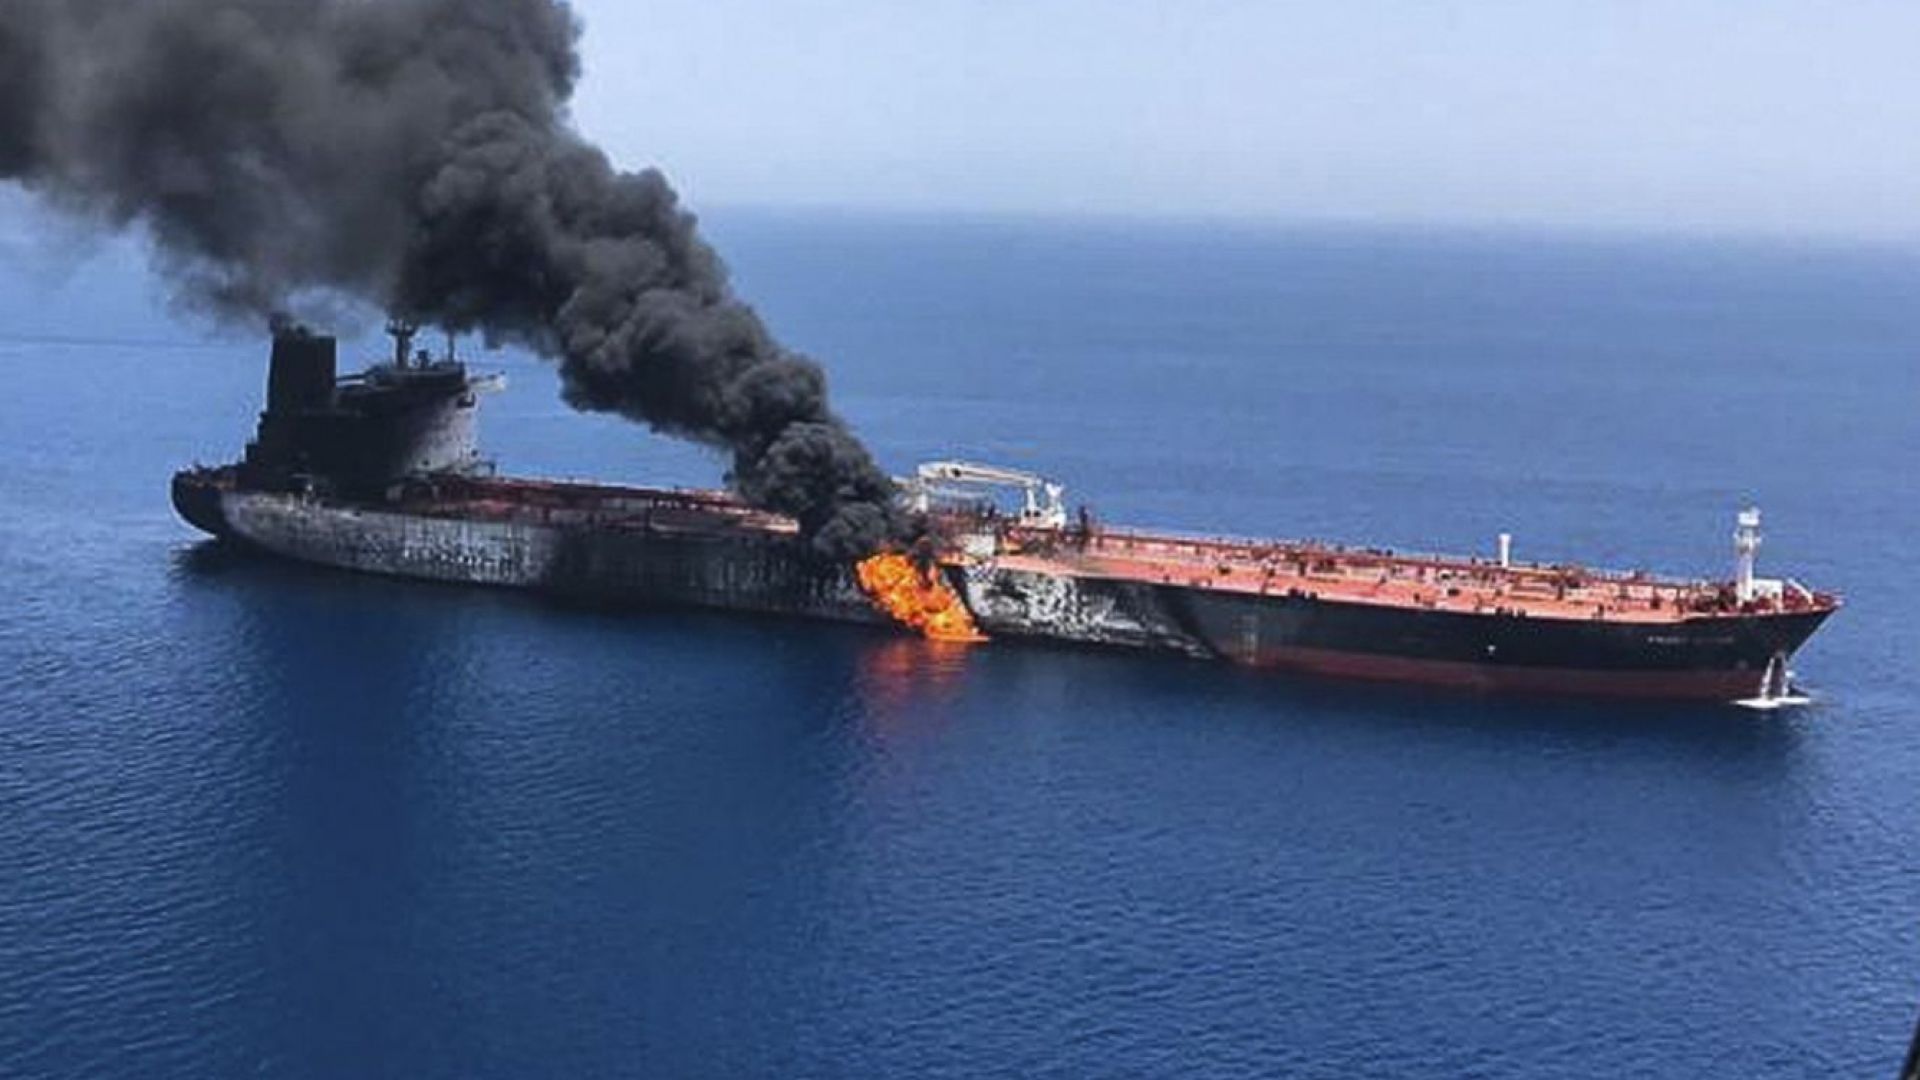 Атаките срещу танкери са дело на професионалисти, пишат руски издания